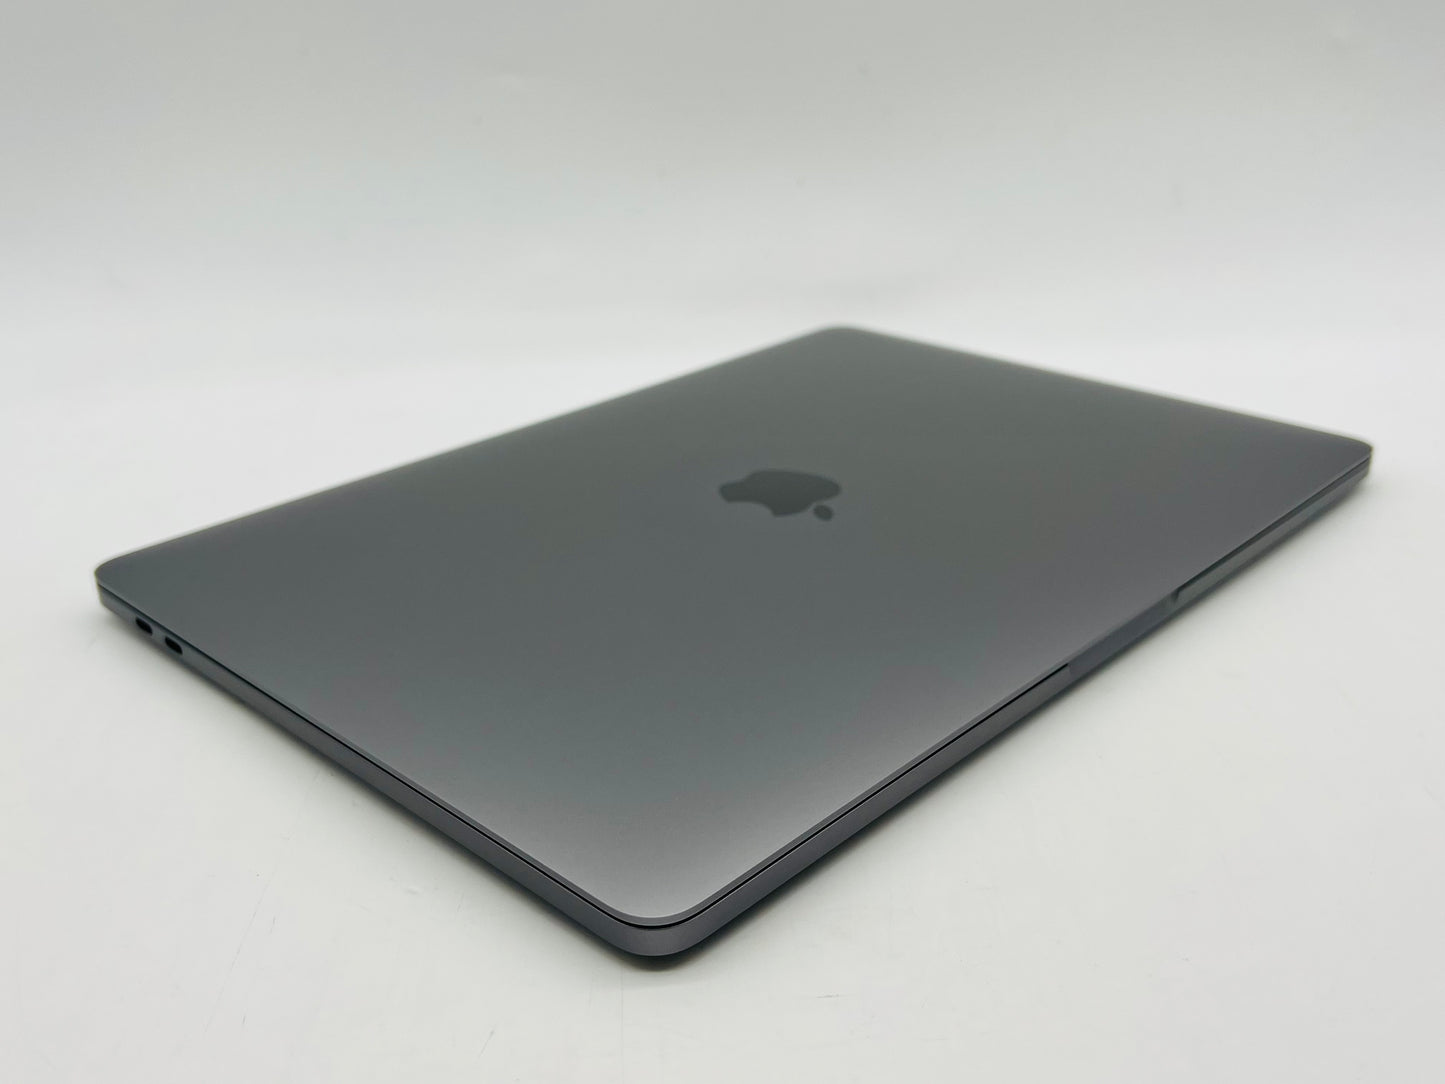 Apple 2020 MacBook Pro 13 in TB 1.4GHz i5 16GB RAM 512GB SSD AC+ - Excellent